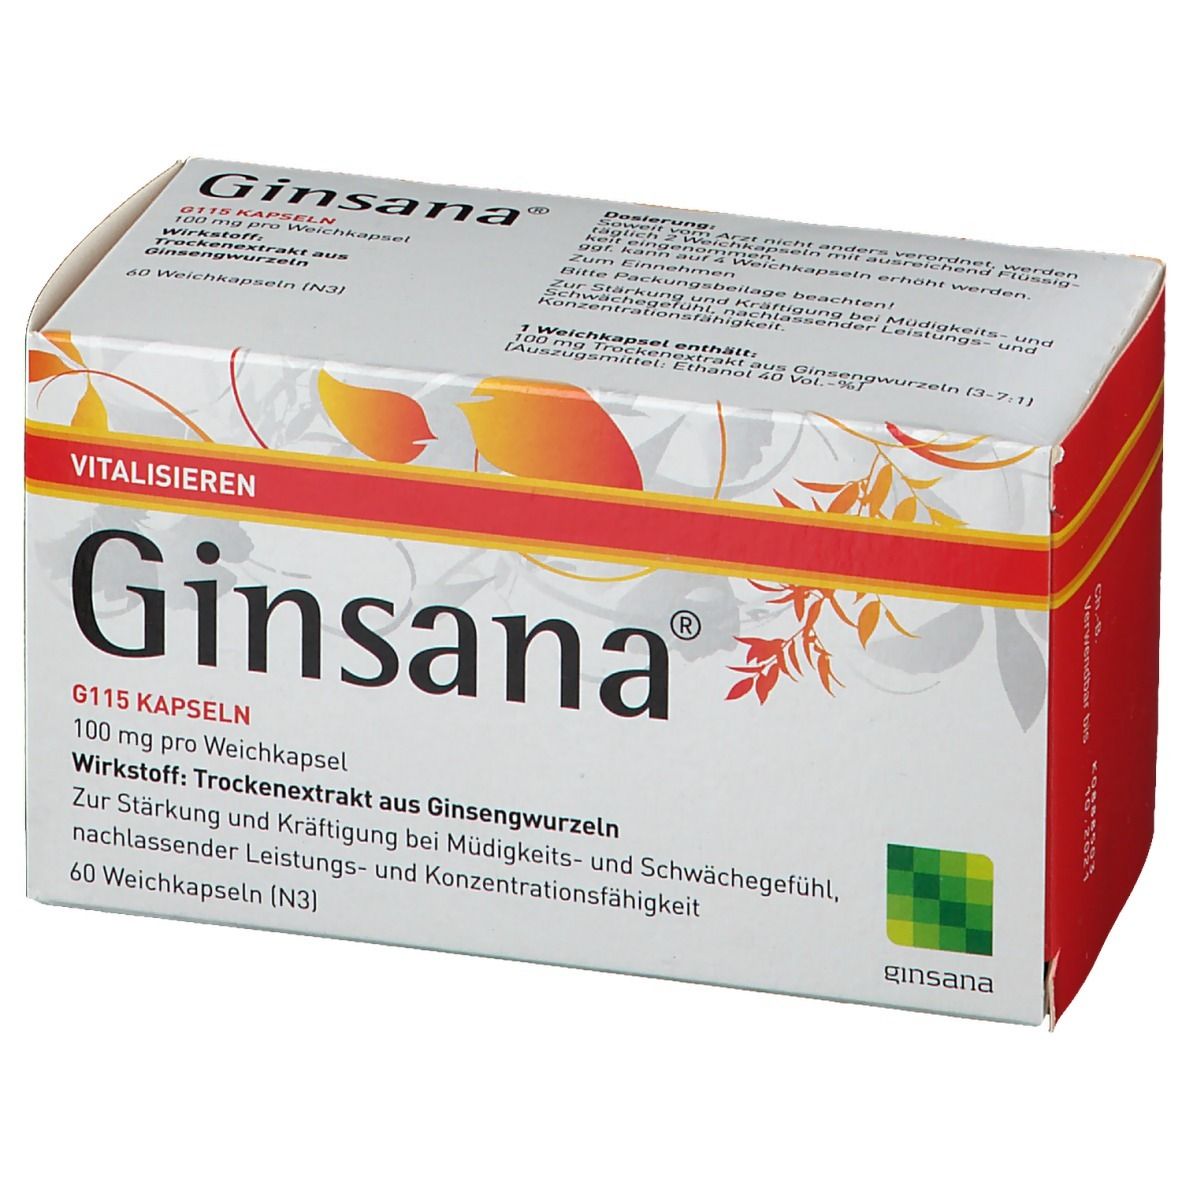 Ginsana G 115 Kapseln